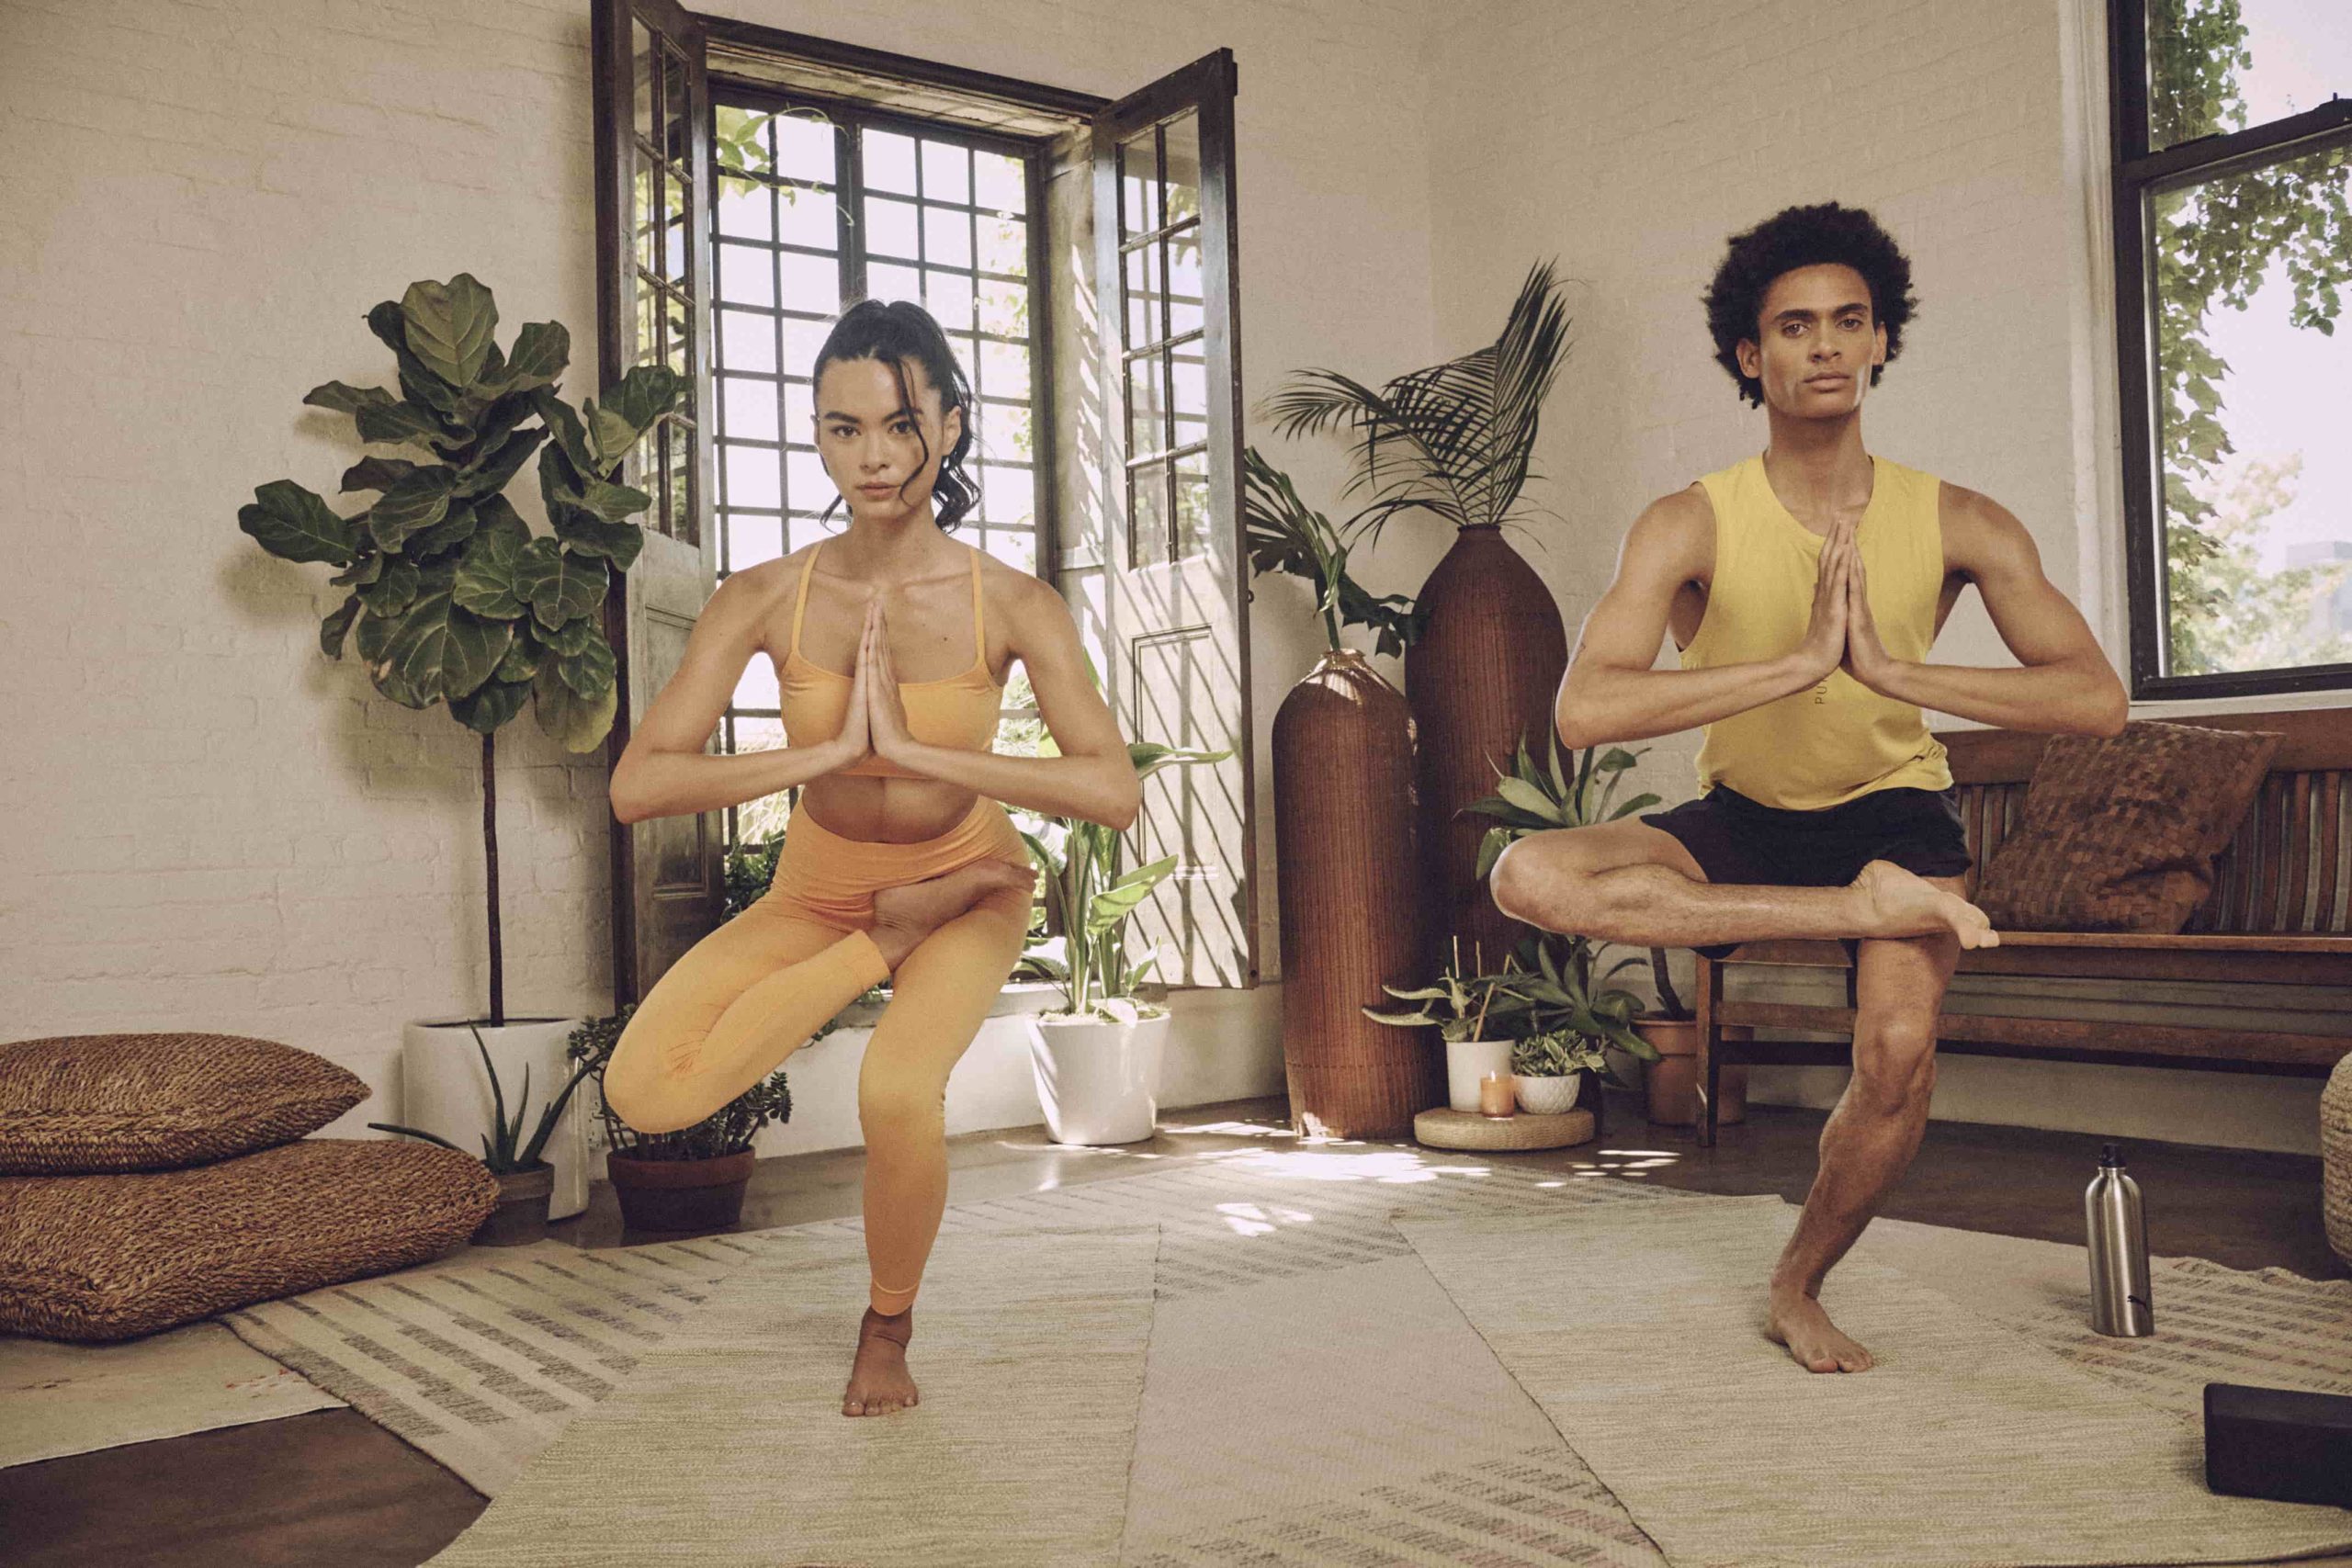 Frau in orangenem Yoga Set und Mann in kurzer schwarzer Hose und gelbem Tank Top in Eka Pada Utkatasana Yoga Stellung